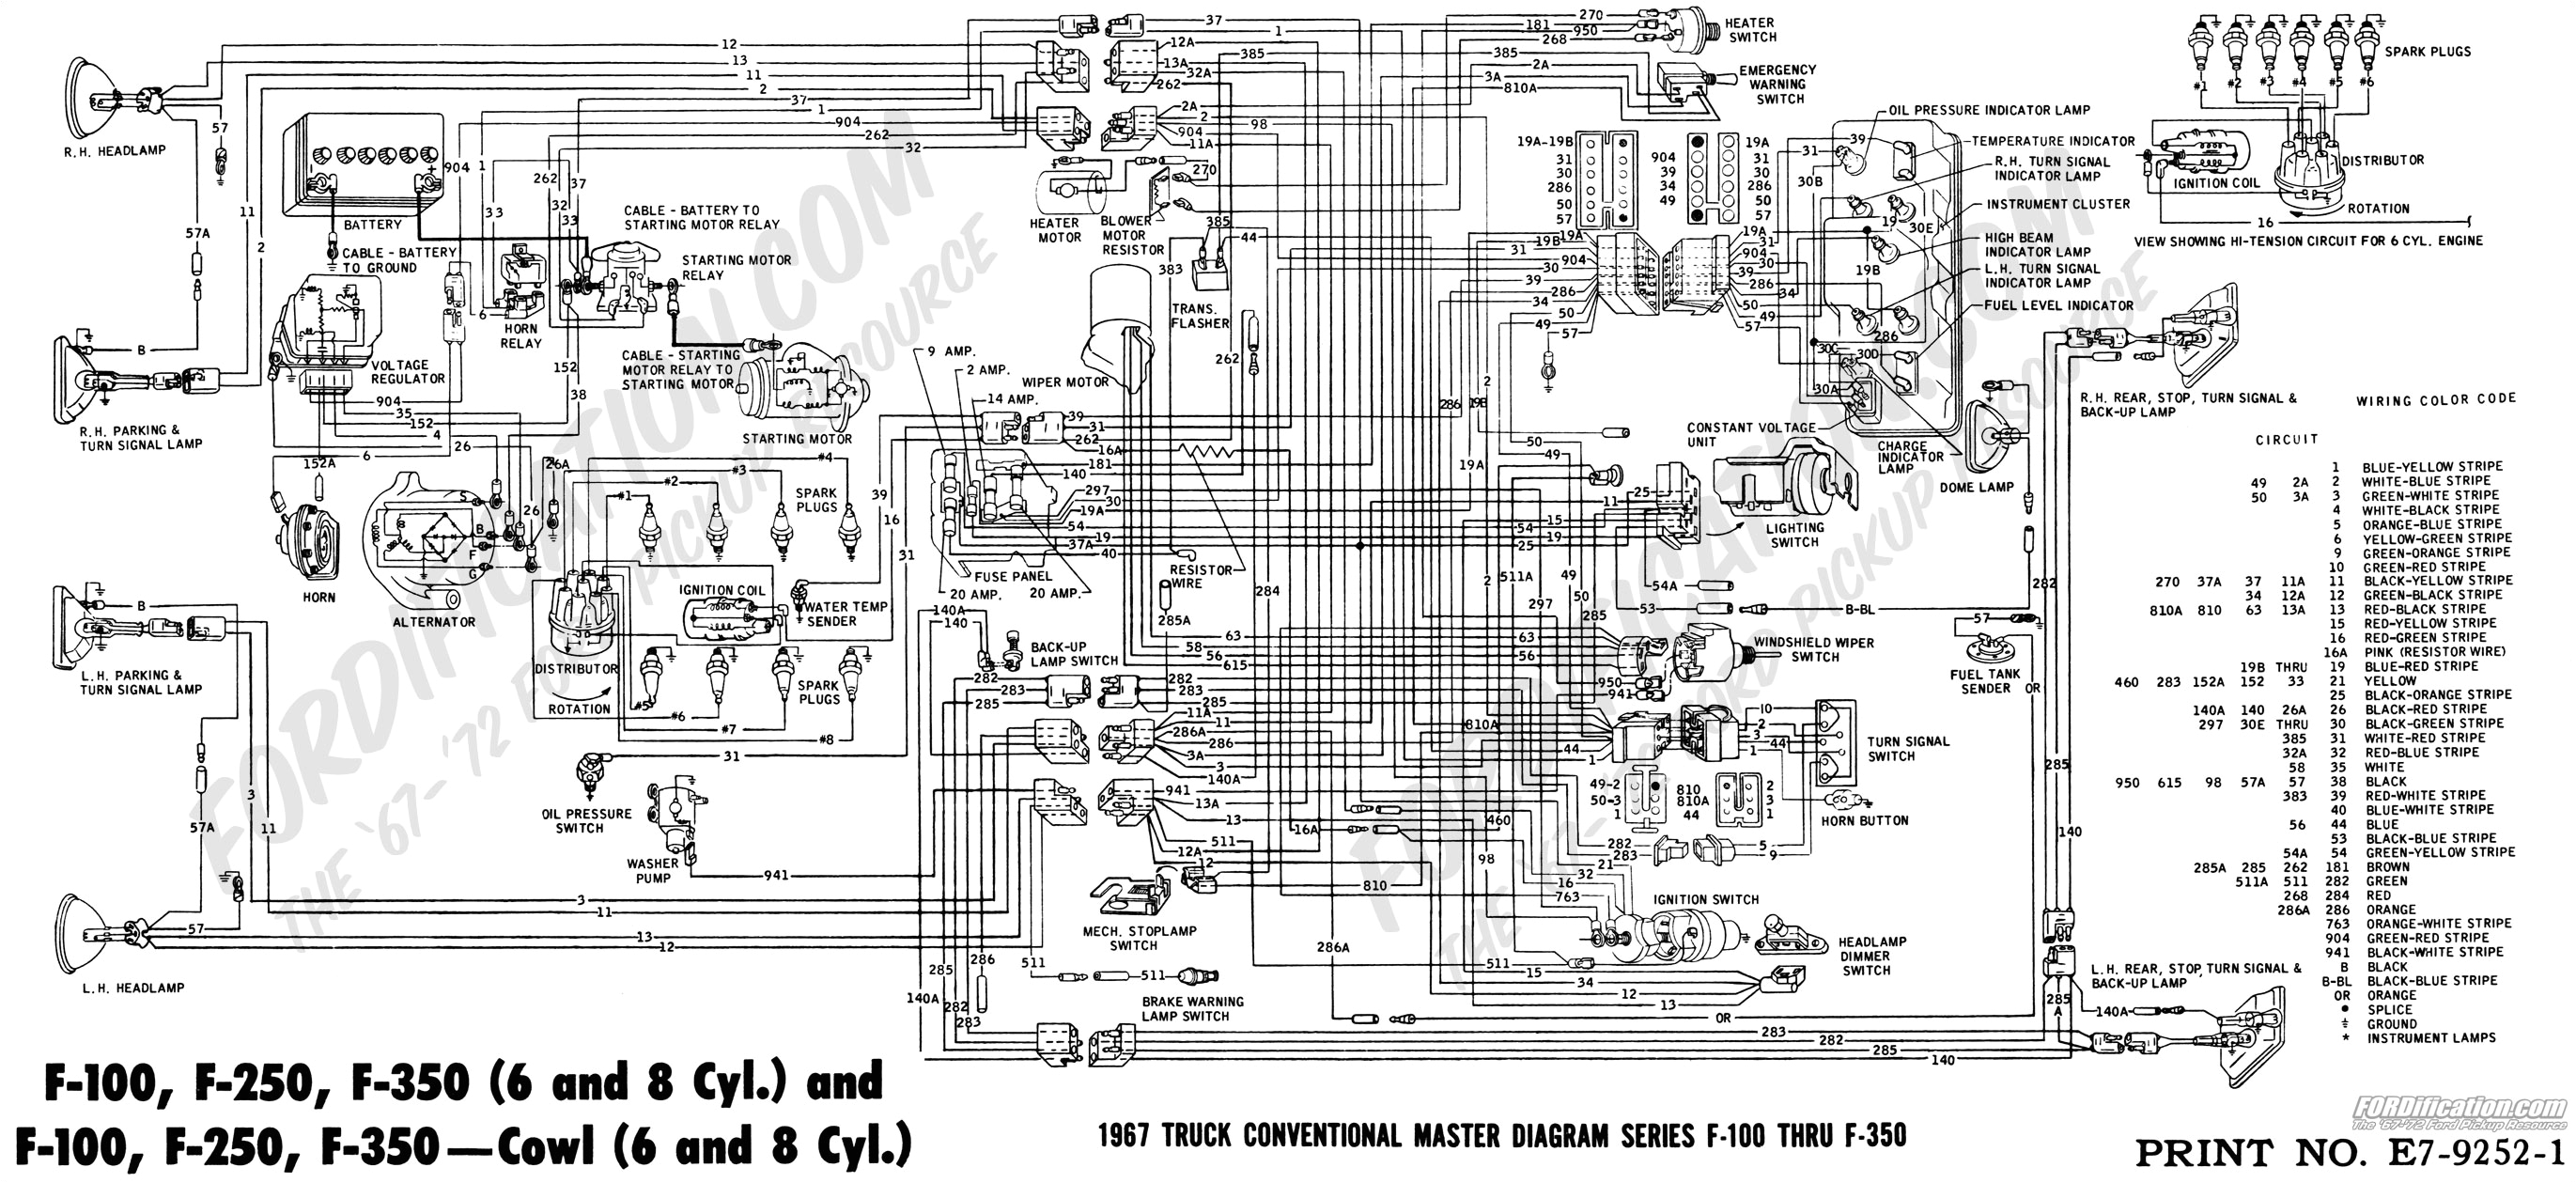 2002 ford f 150 wiring harness diagram wiring diagram article2002 ford f150 wiring harness diagram wiring